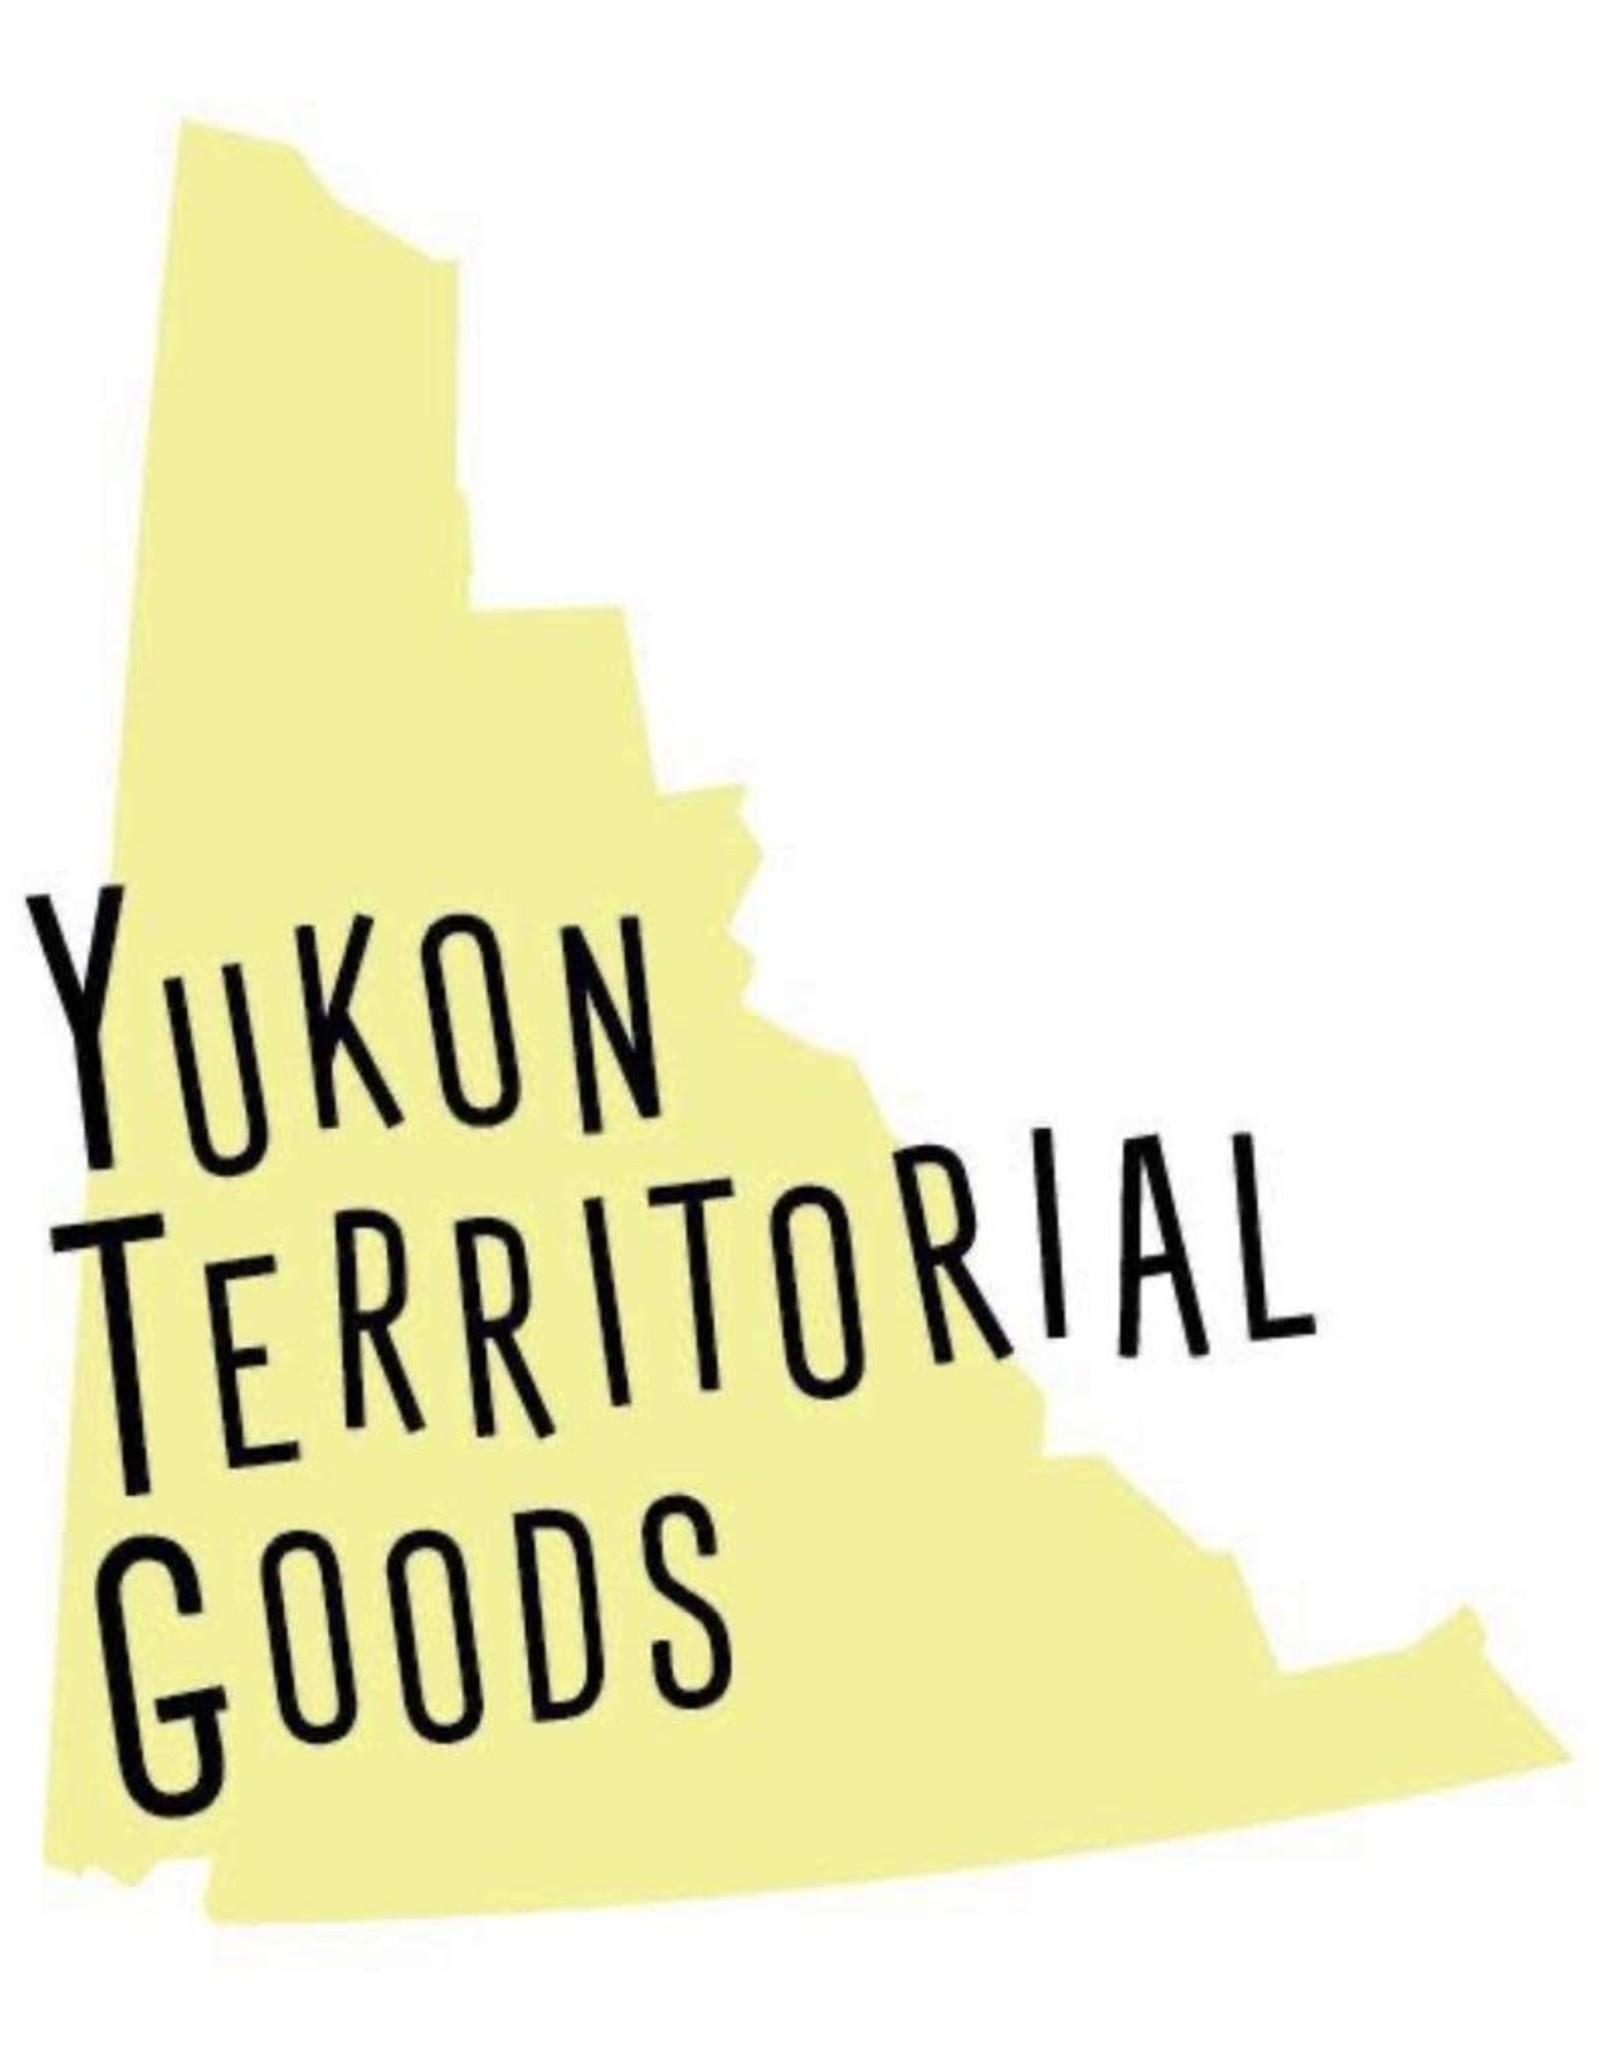 YTG -Kid's Yukon Truck Tshirt